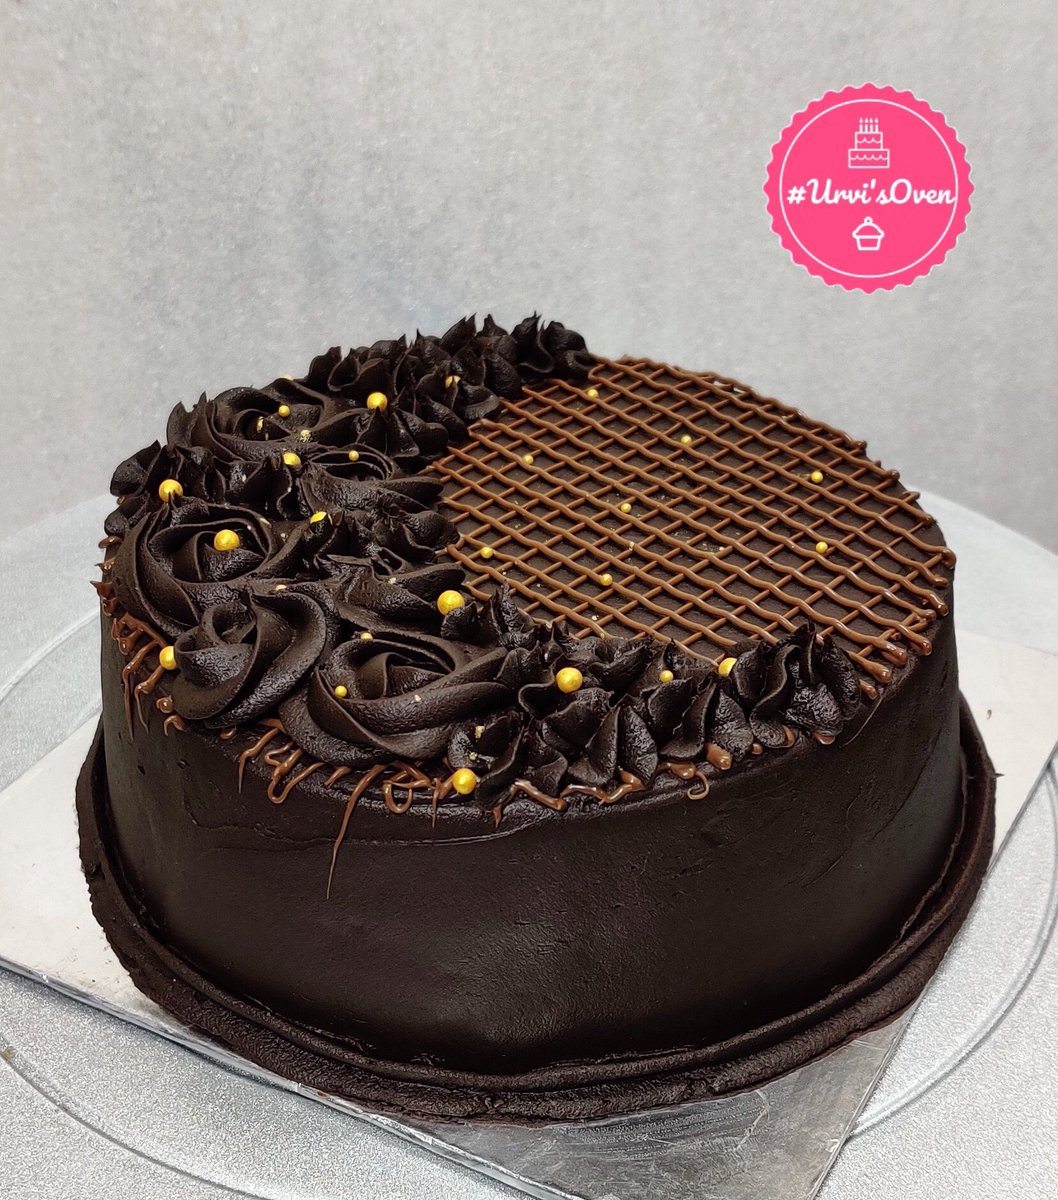 Another chocolate truffle cake ❤️
#LoveToBake